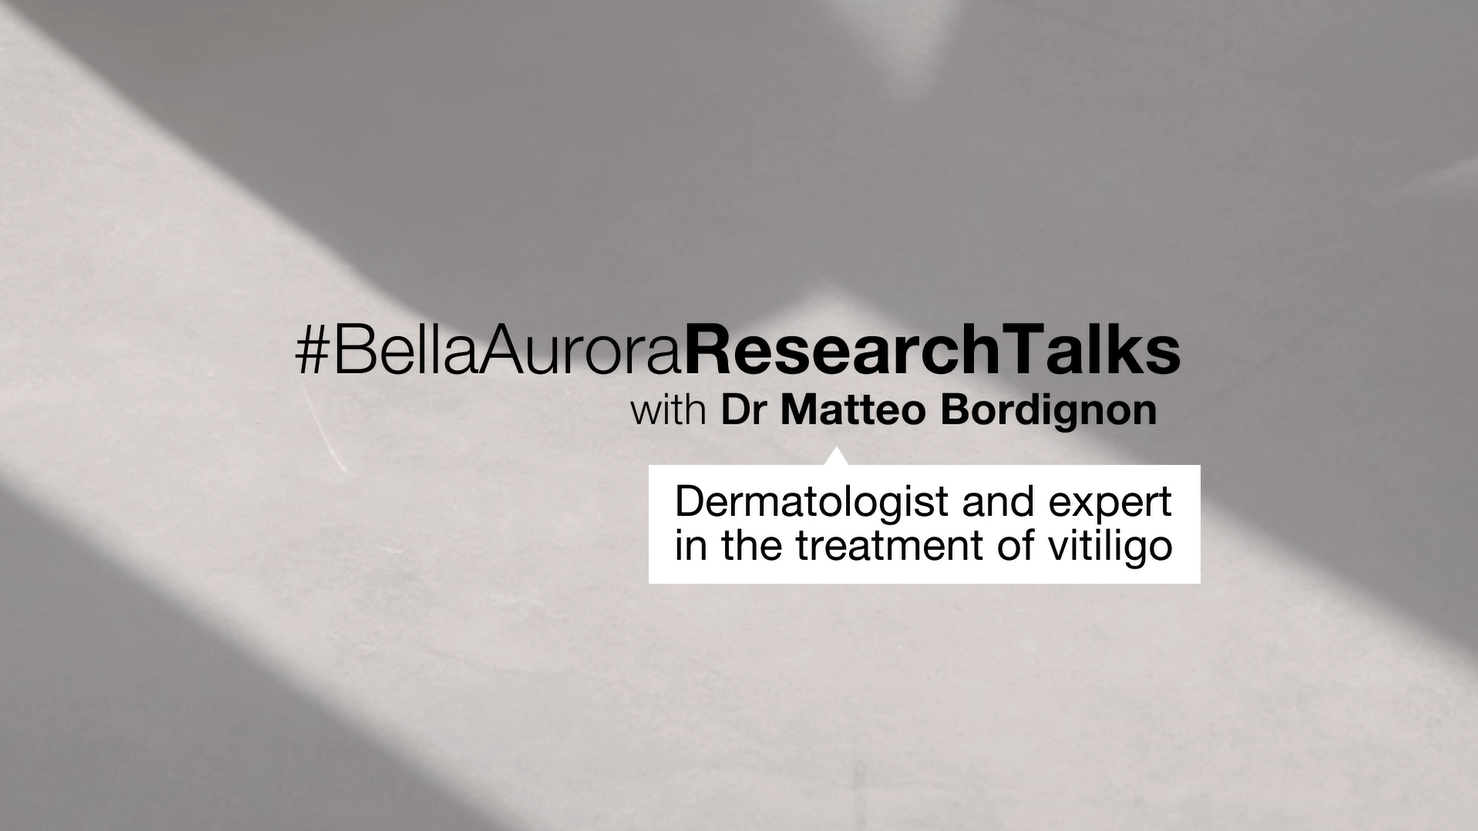 #BellaAuroraResearchTalks with Dr Matteo Bordignon